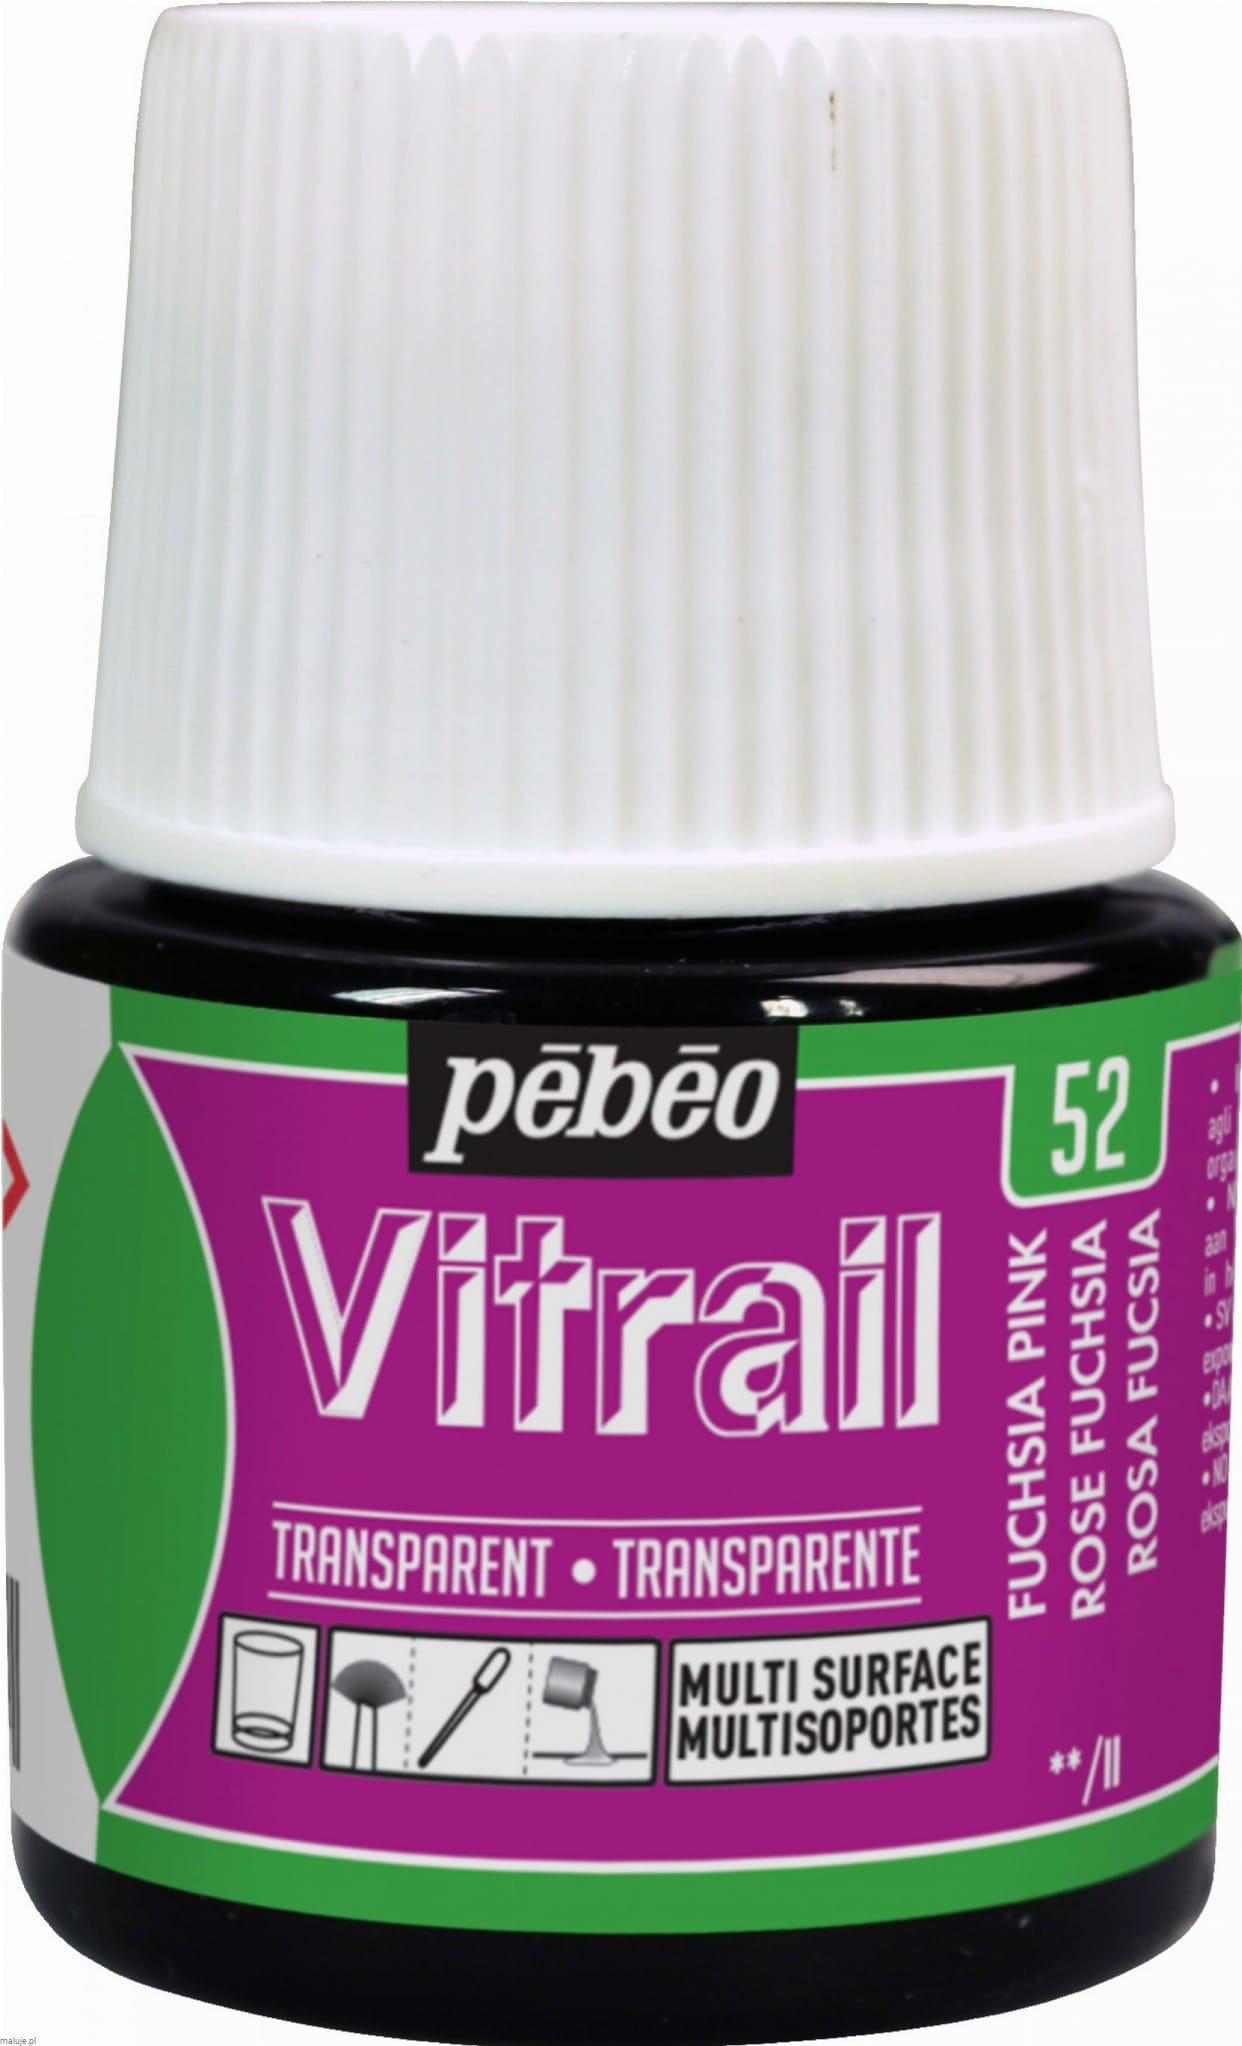 Vitrail Transparent 52 FUCHSIA PINK - farba witrażowa